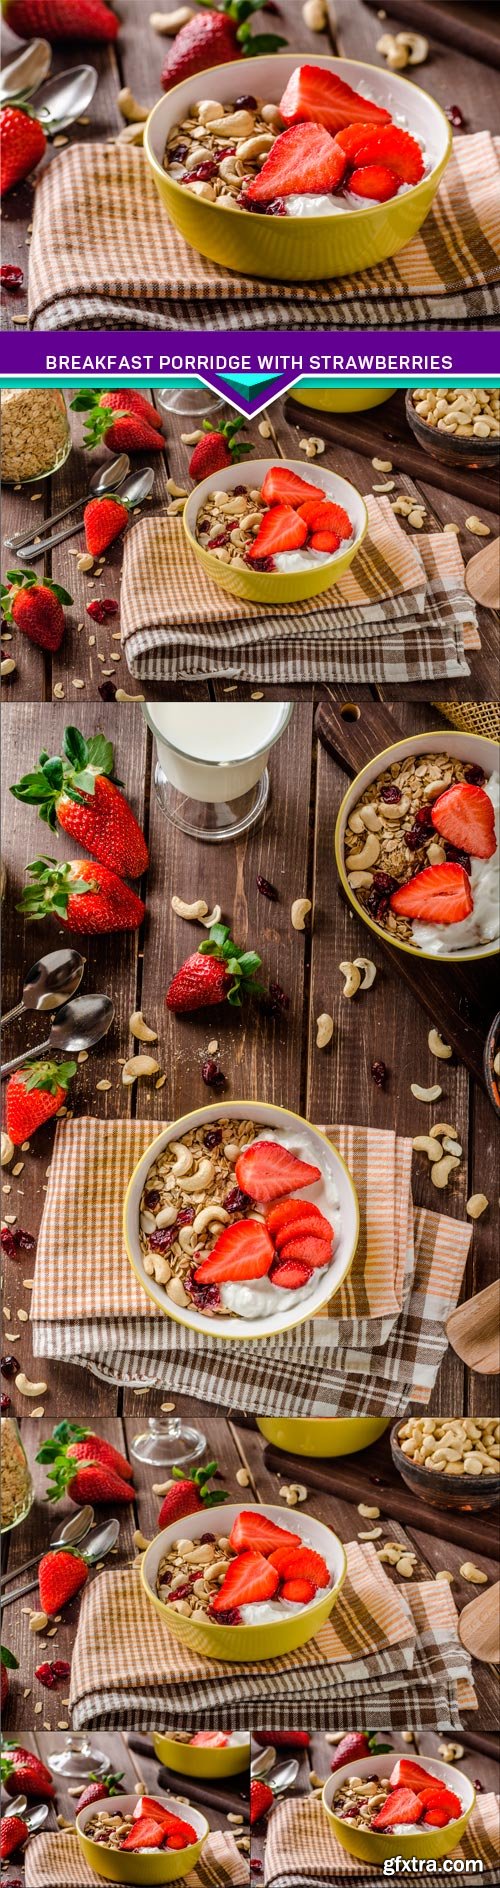 Breakfast porridge with strawberries 5x JPEG